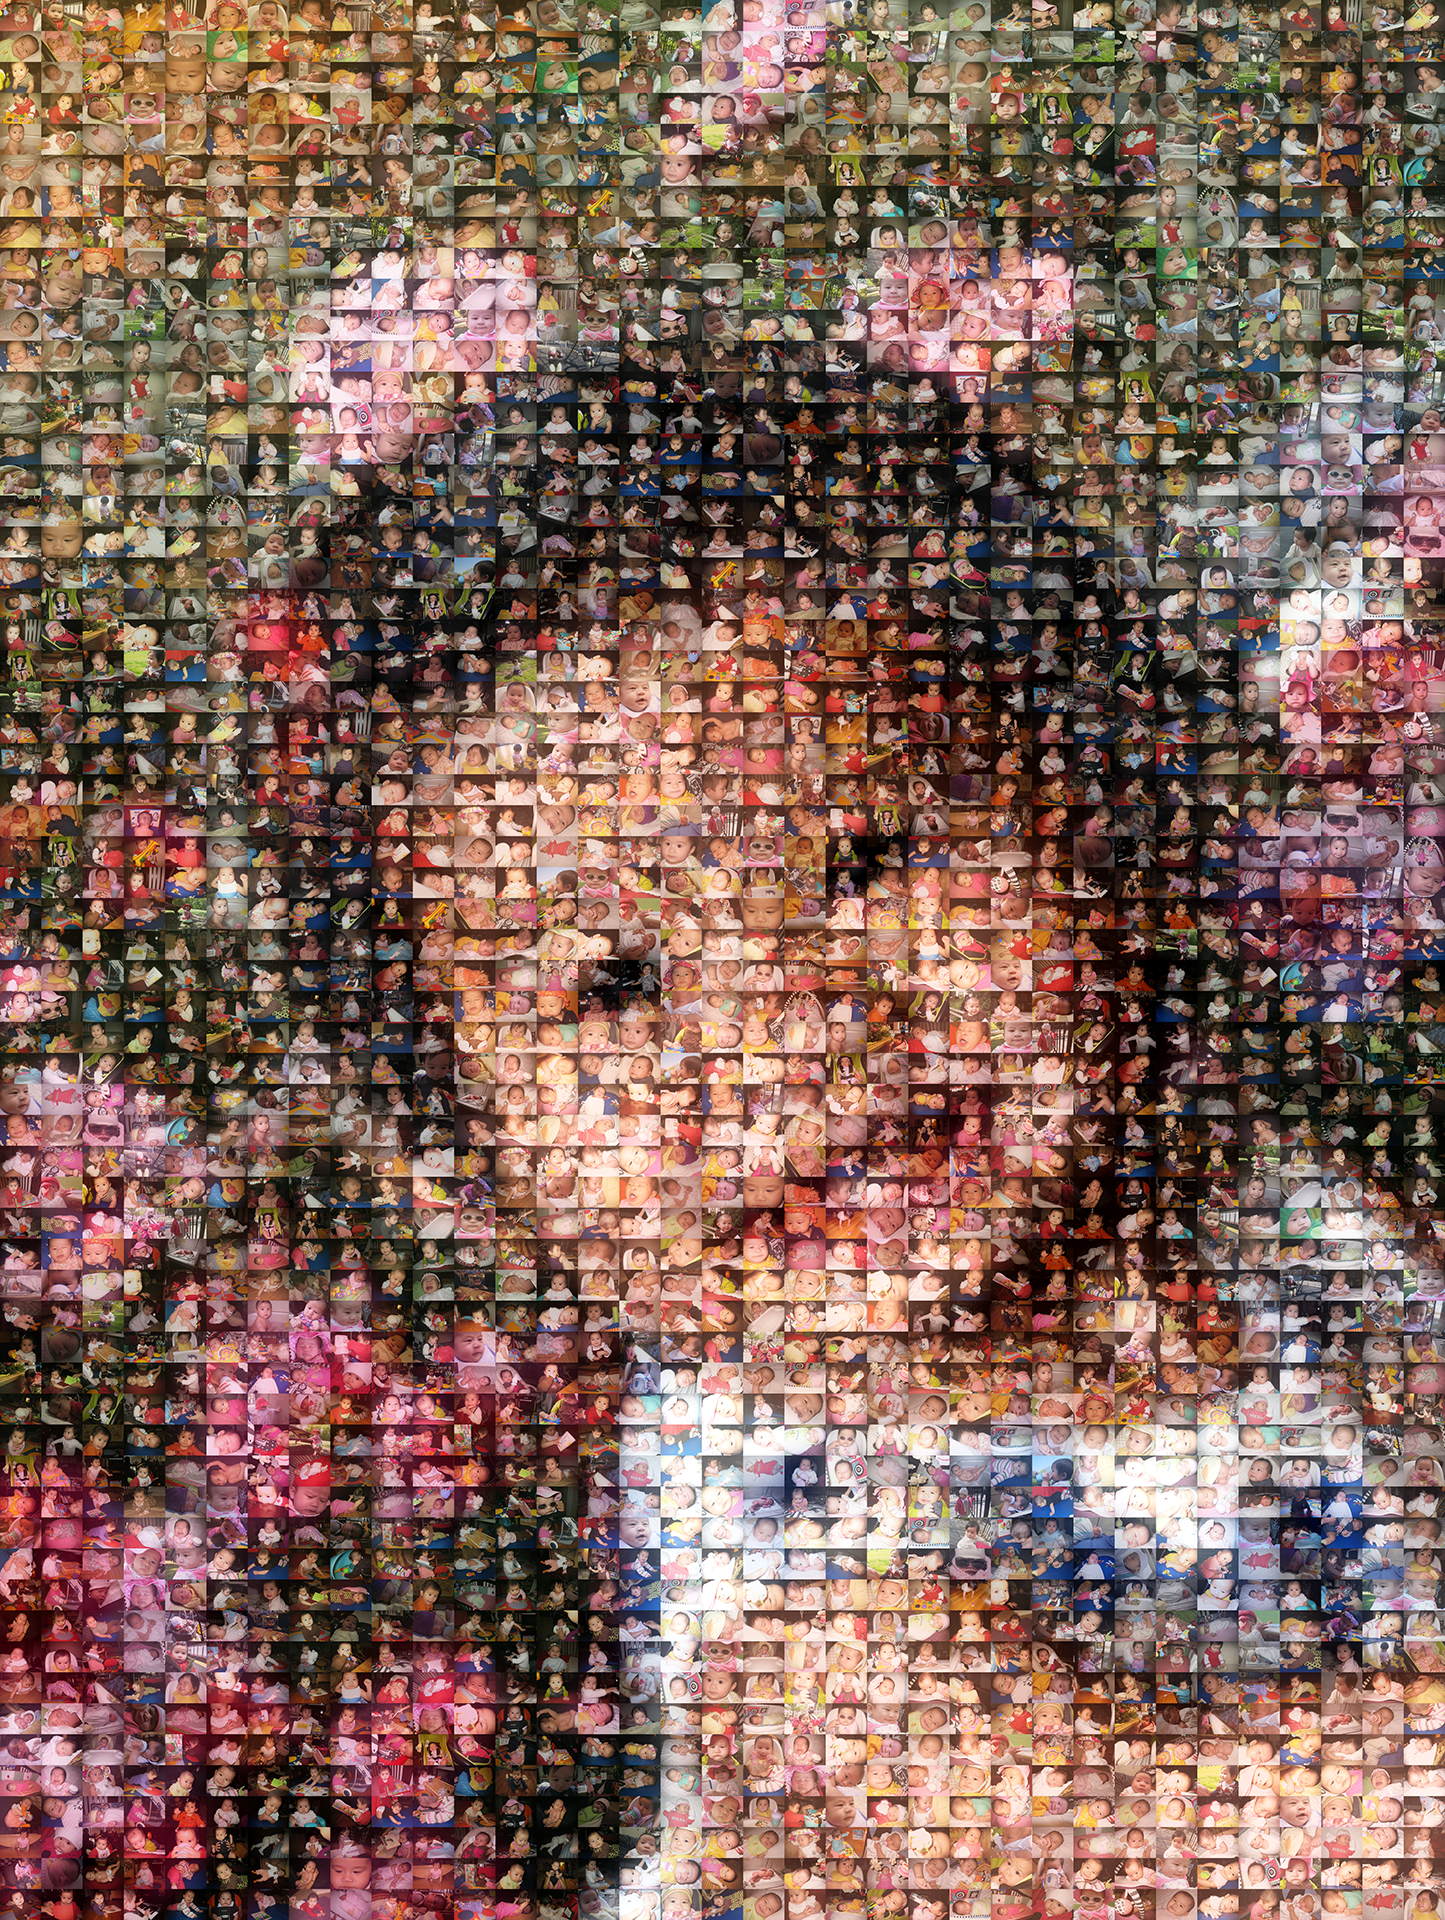 photo mosaic created using 524 baby photos